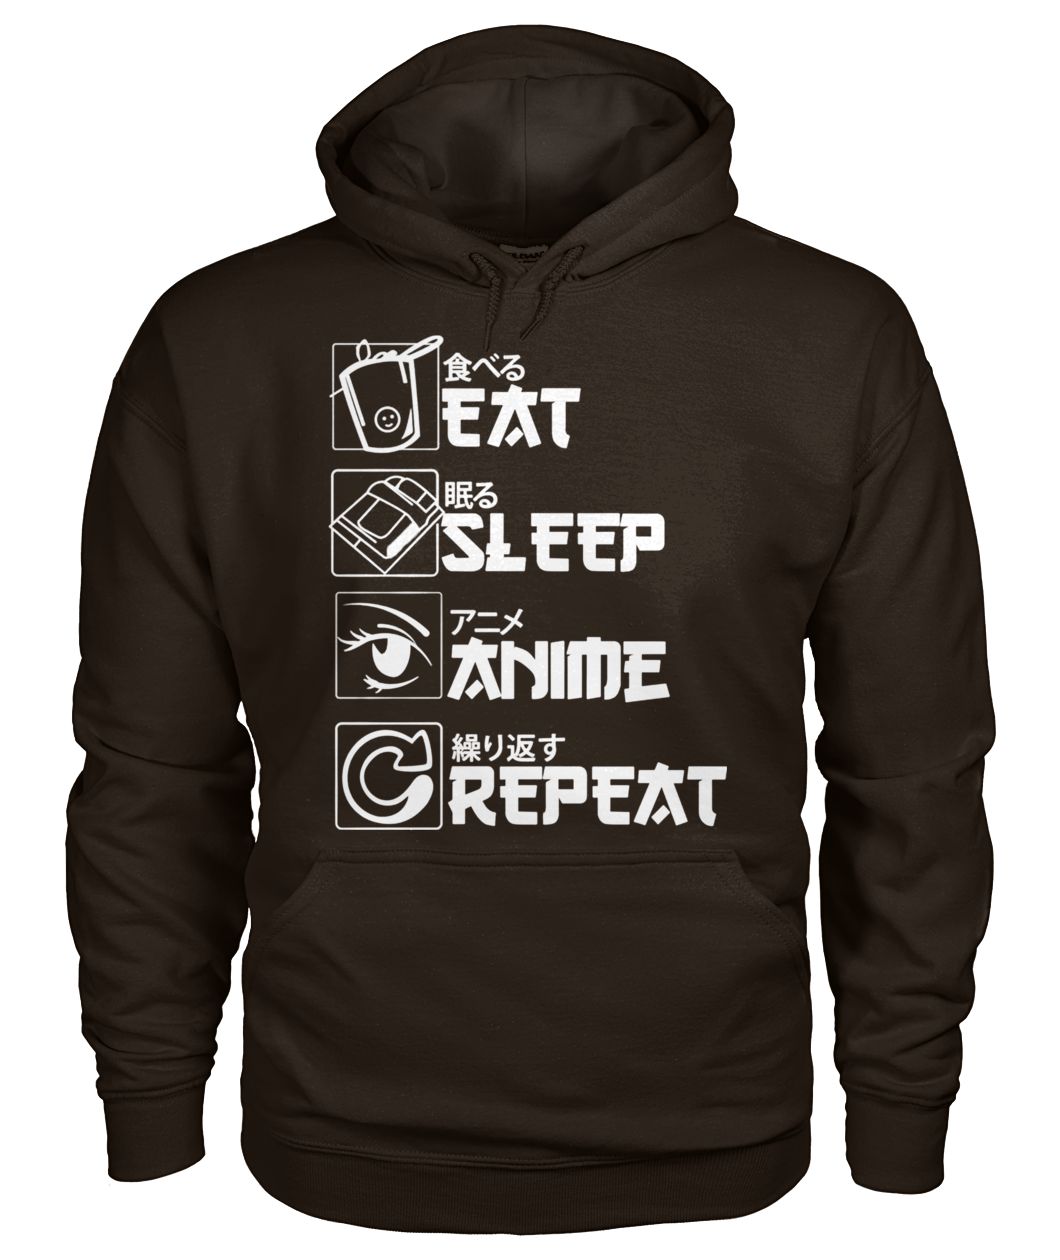 Animation lover eat sleep anime repeat gildan hoodie